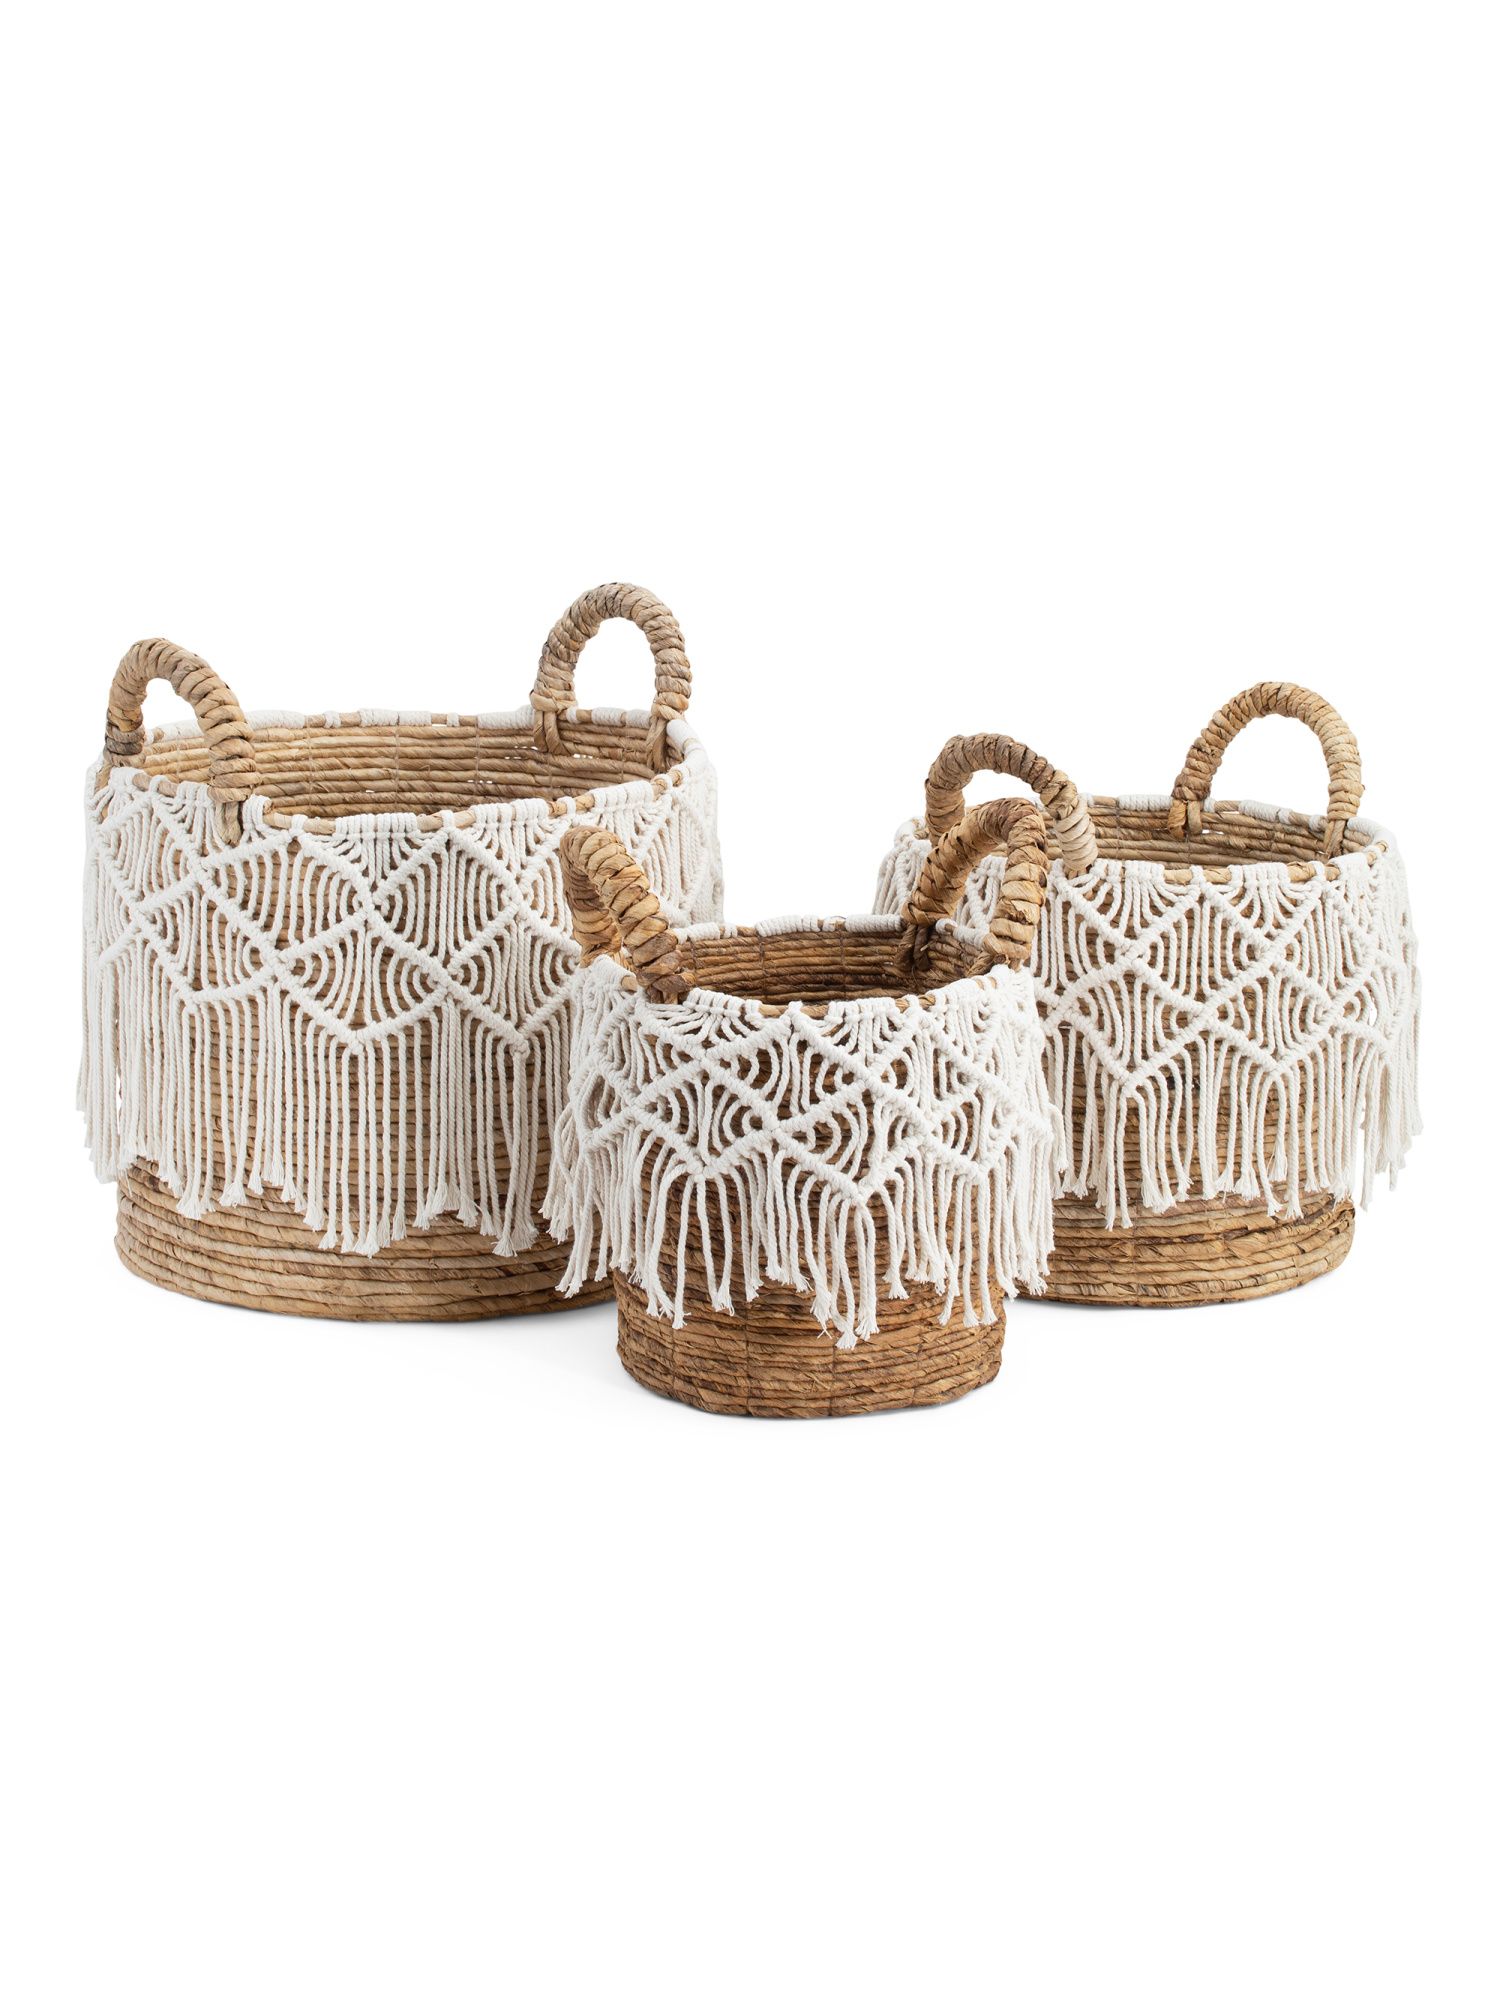 Banana Basket With White Macrame Collection | TJ Maxx